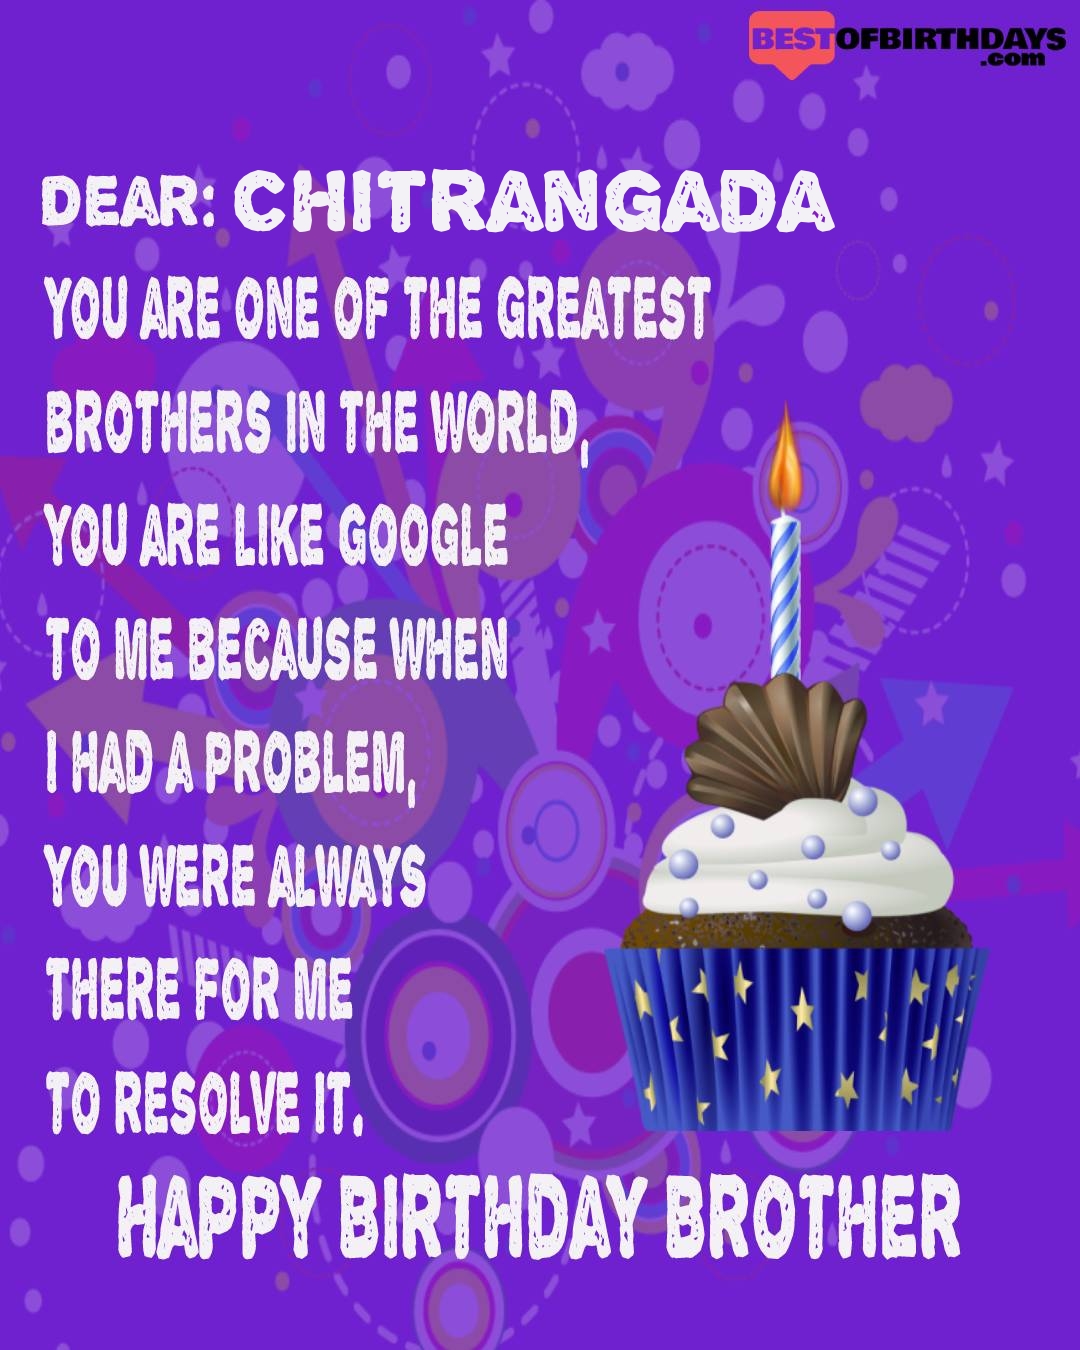 Happy birthday chitrangada bhai brother bro